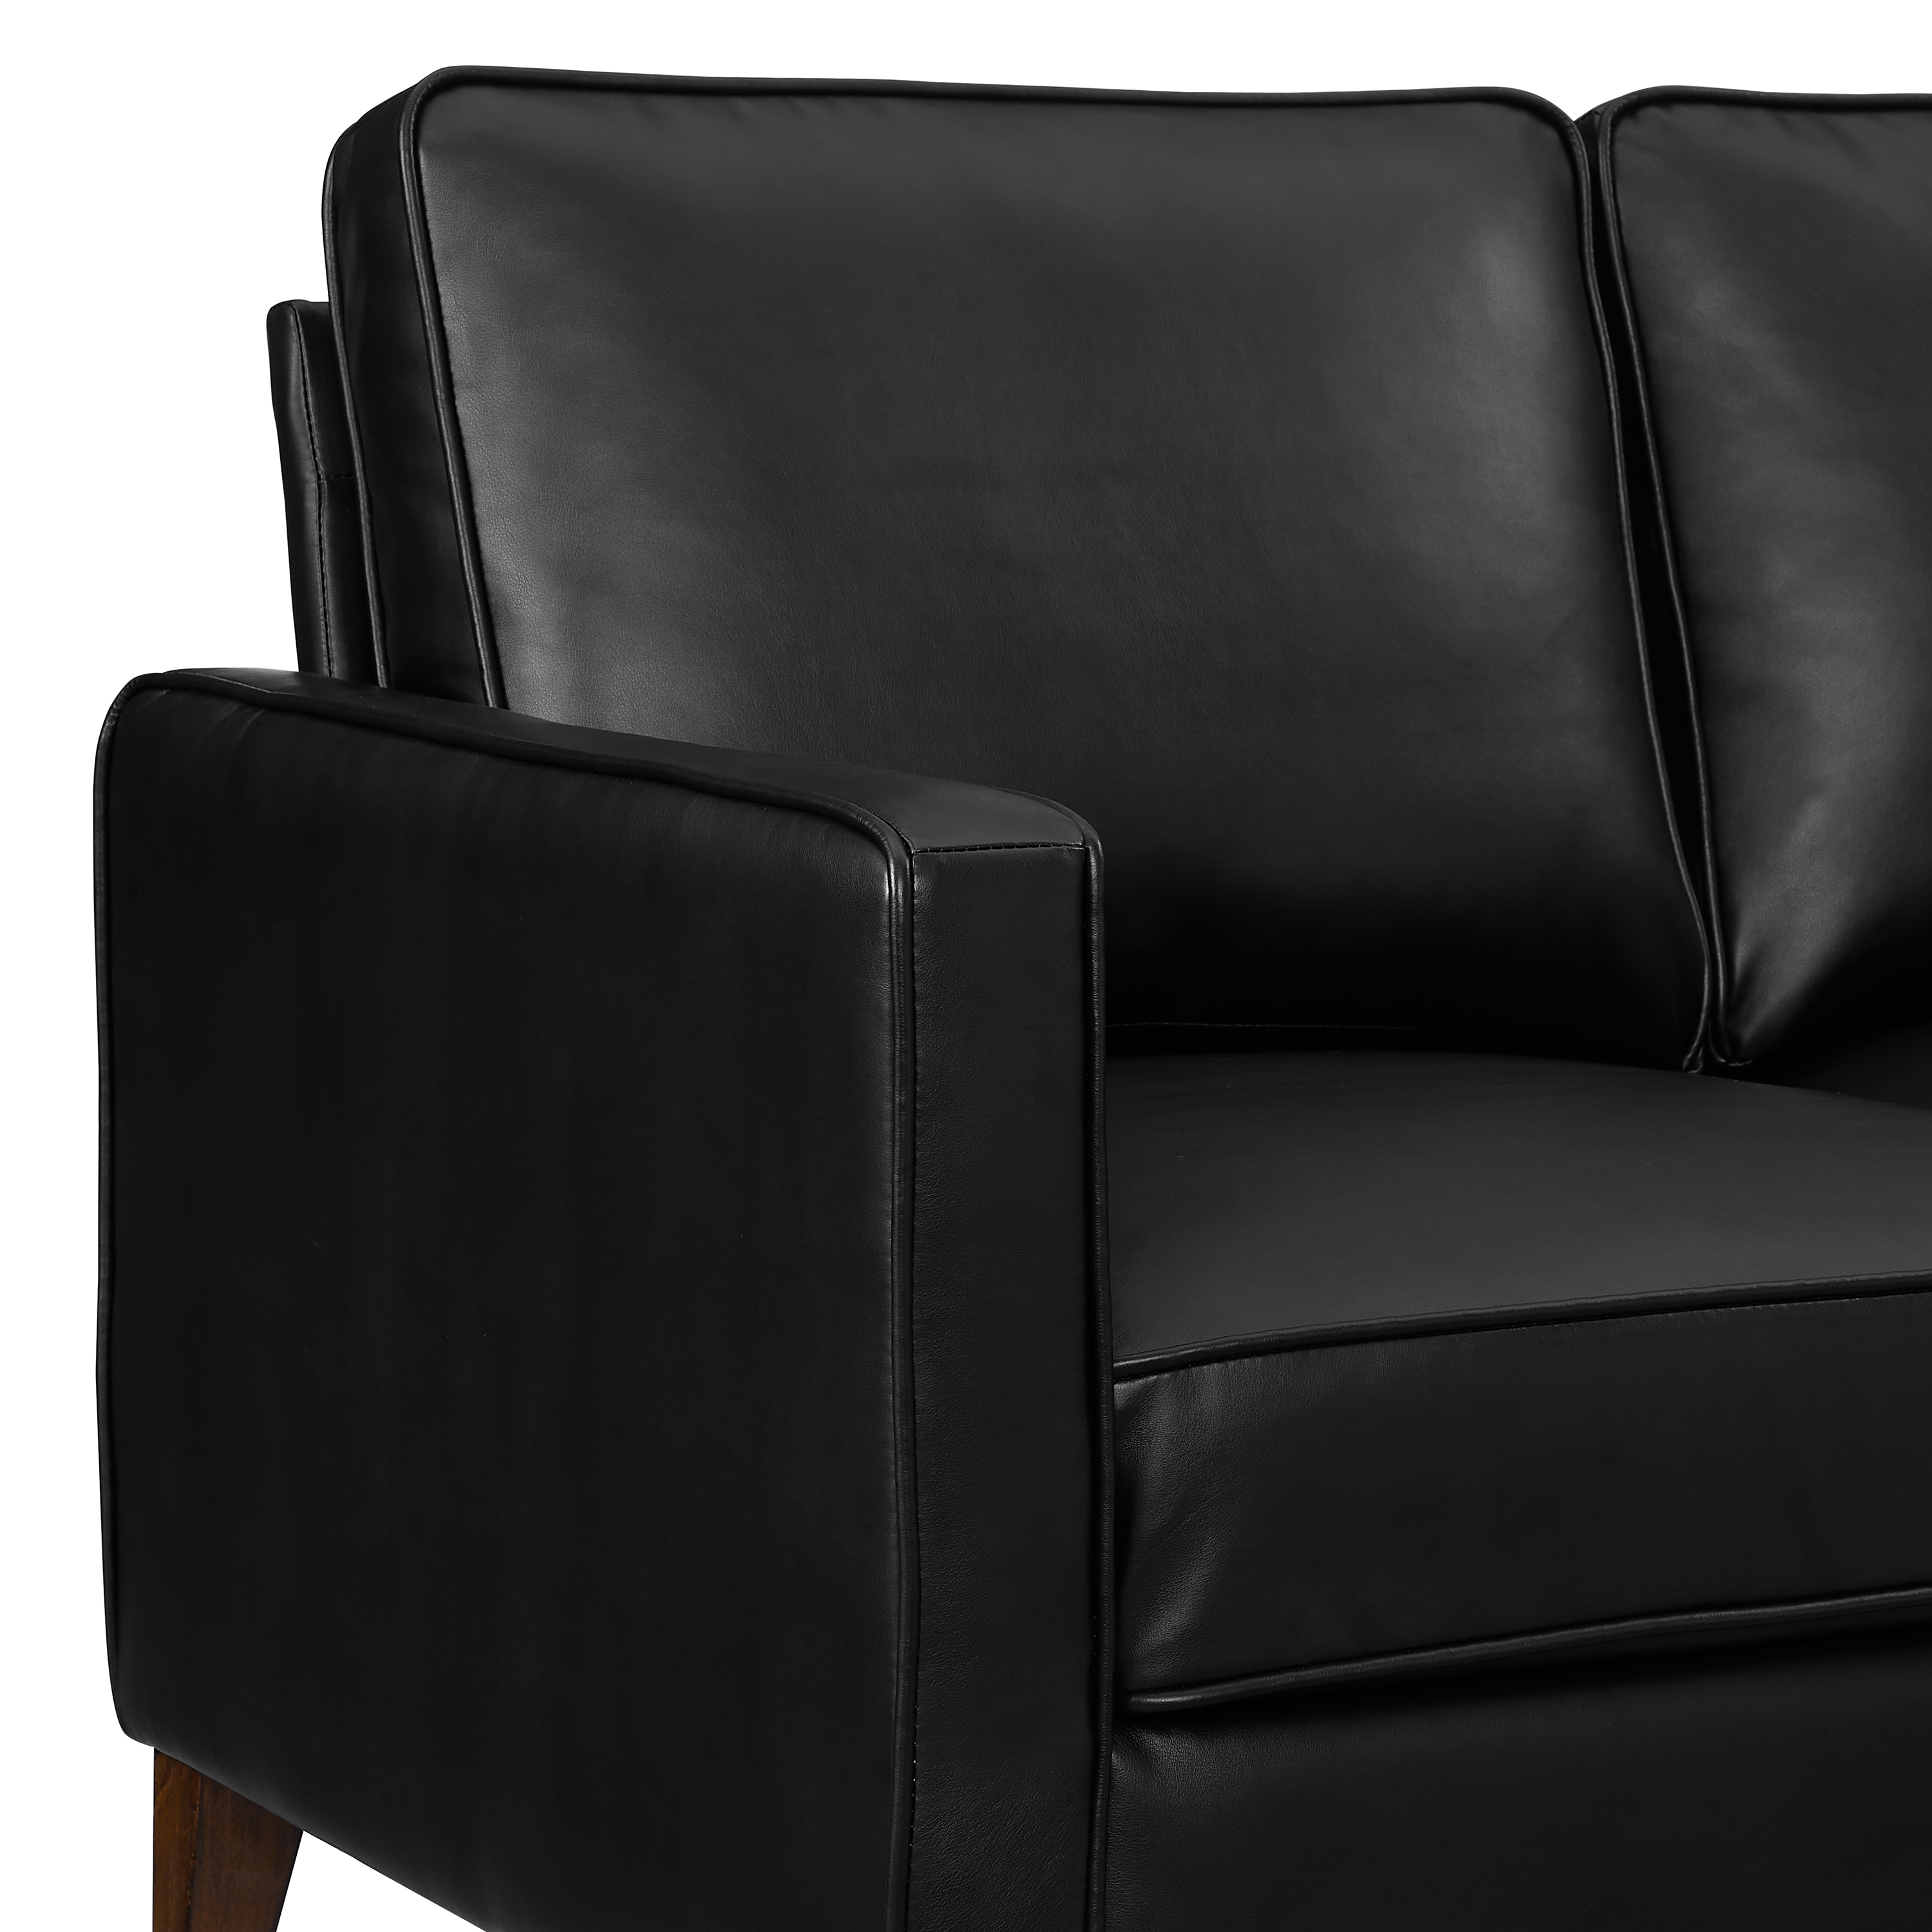 Hillsdale Jianna Faux Leather Sofa, Black - image 9 of 12